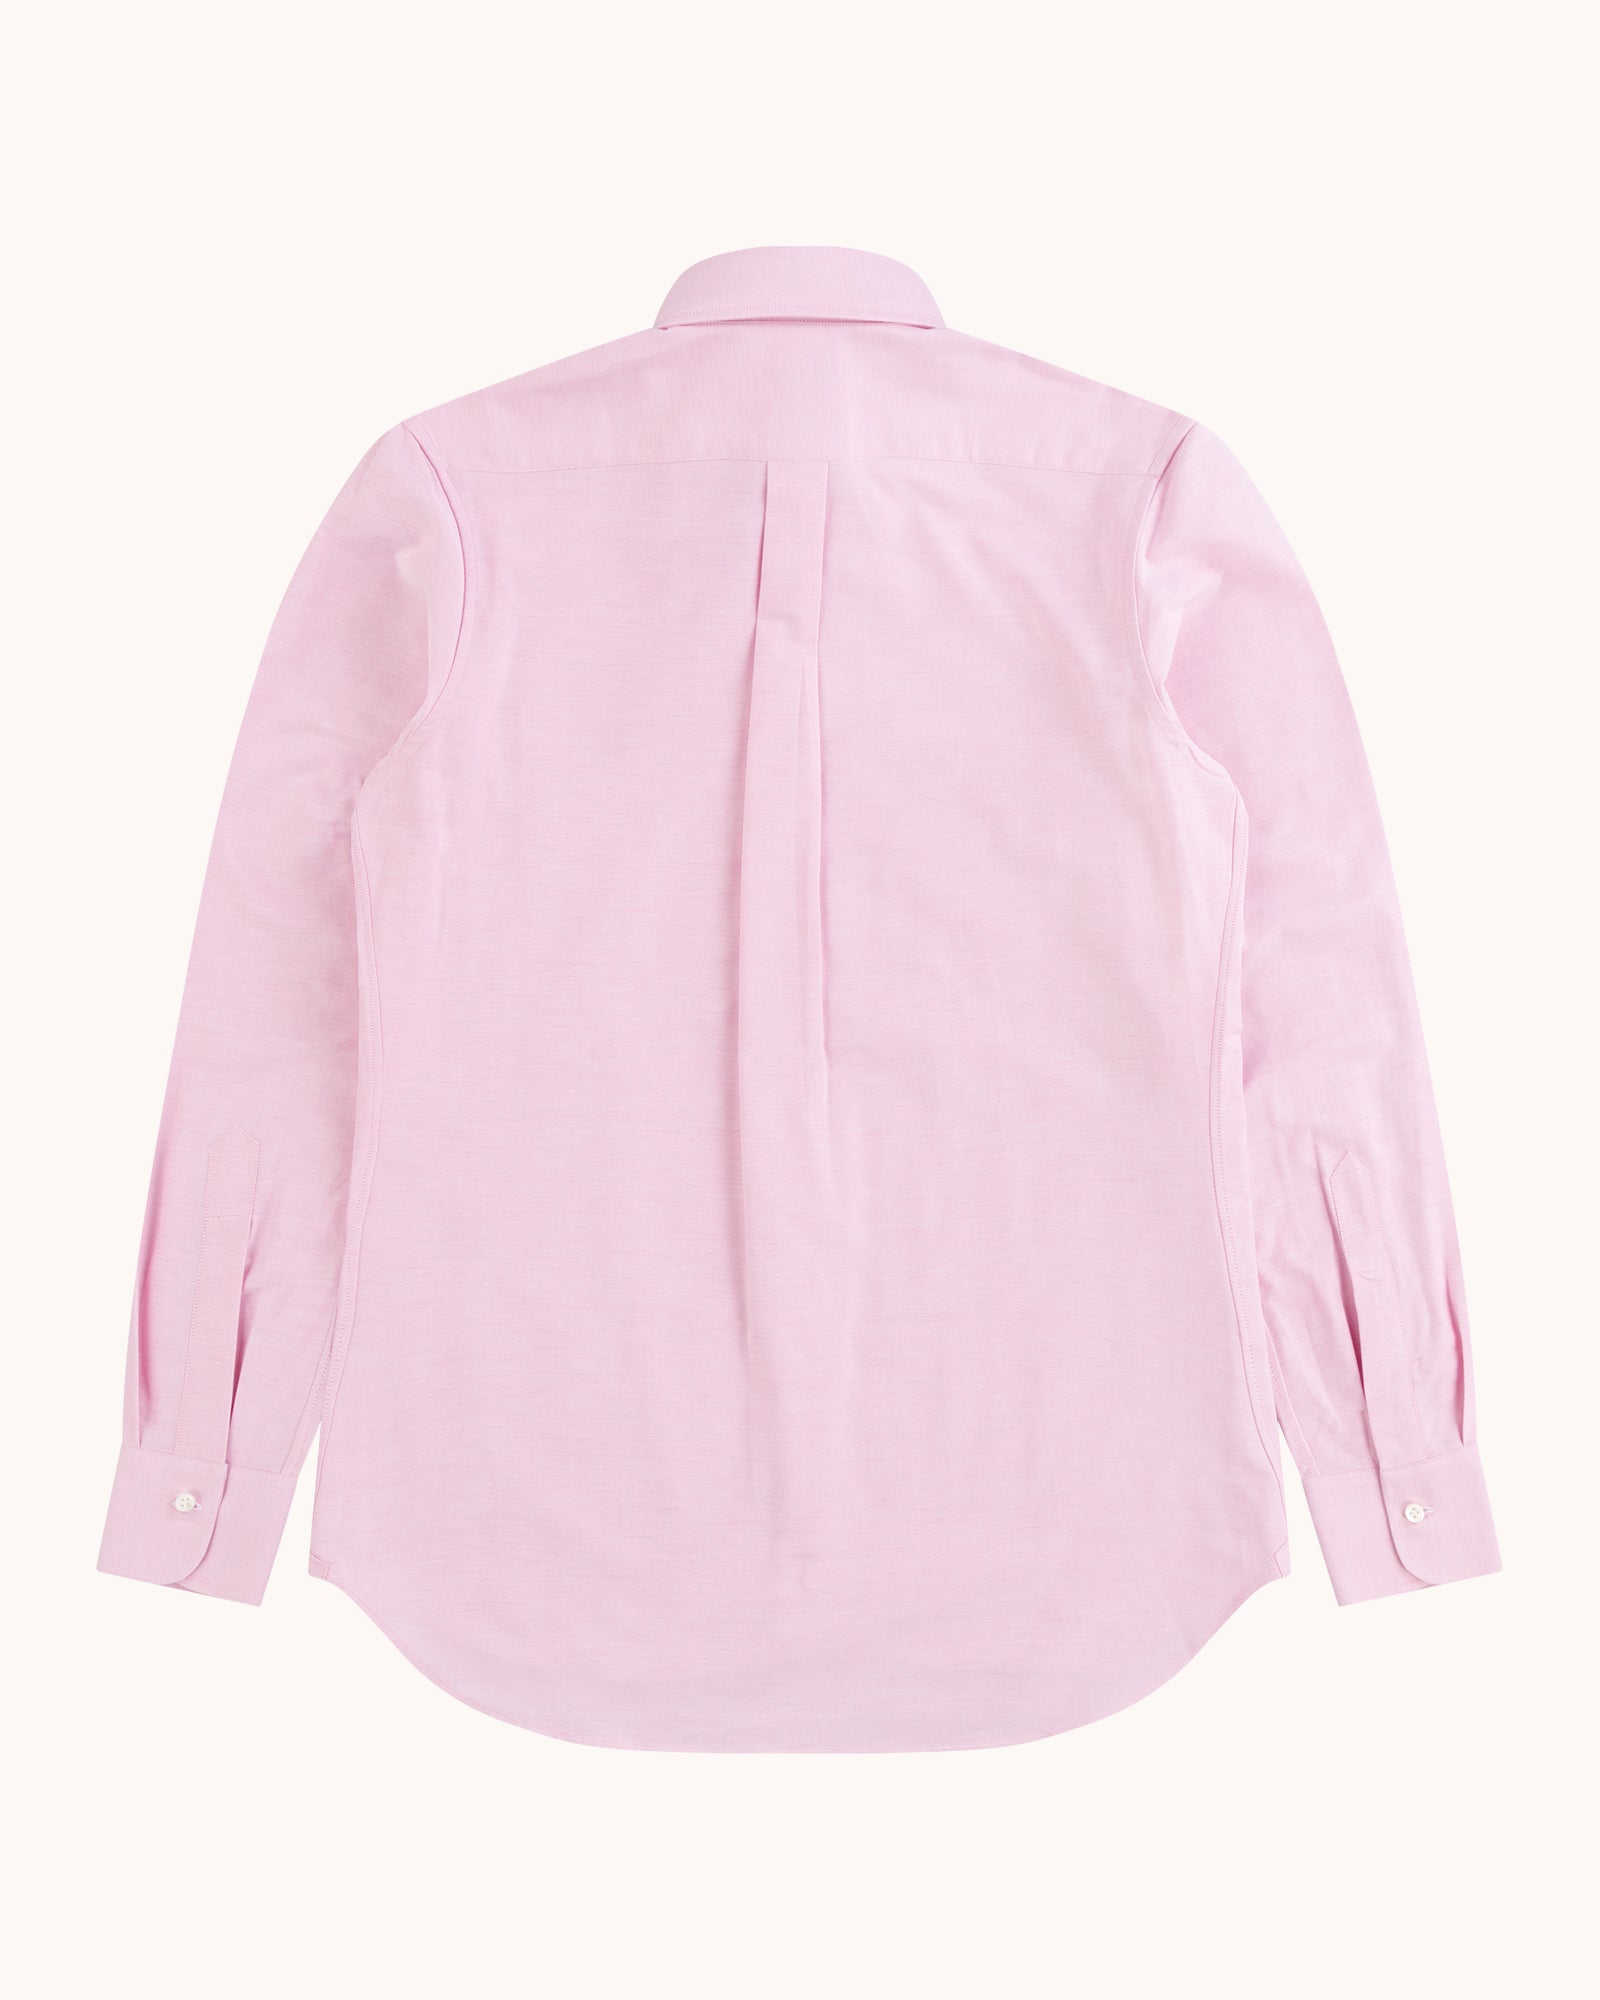 Button Down Collar Shirt - Pink Oxford Cotton